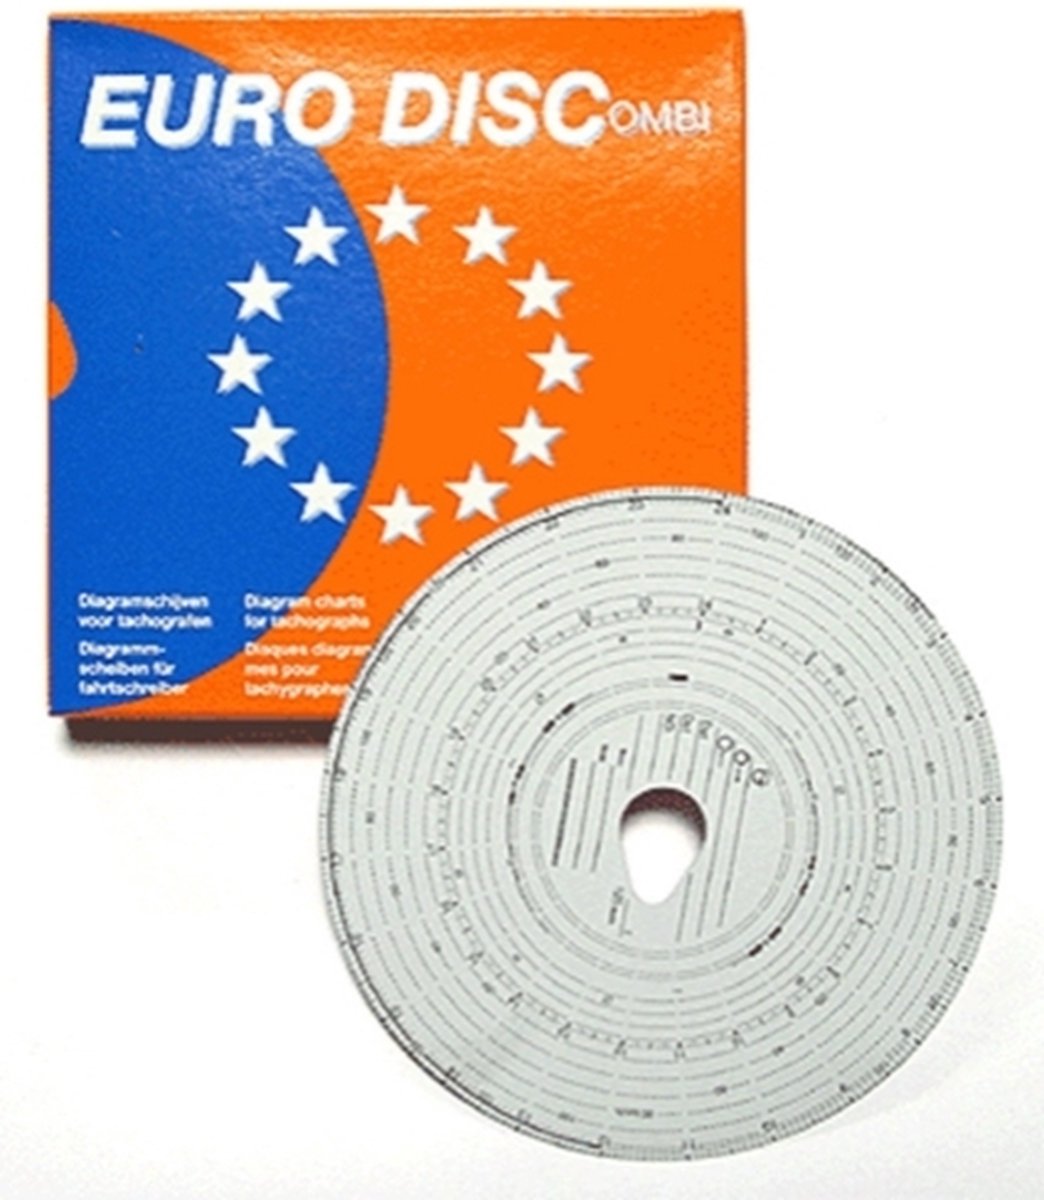 Euro Disc - EURO DISC 125 KM COMBI